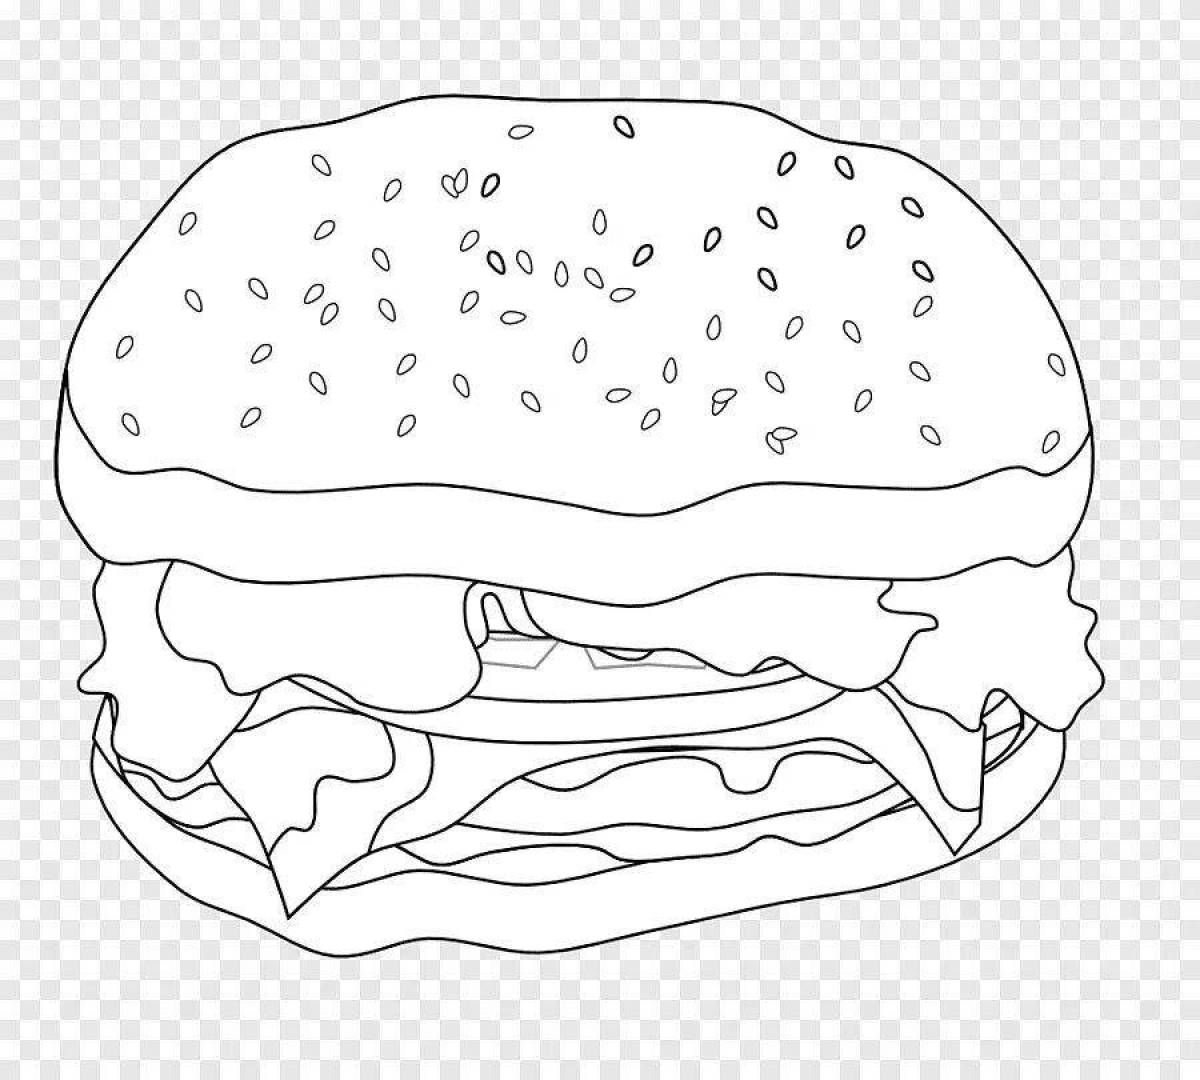 Spicy hamburger coloring page